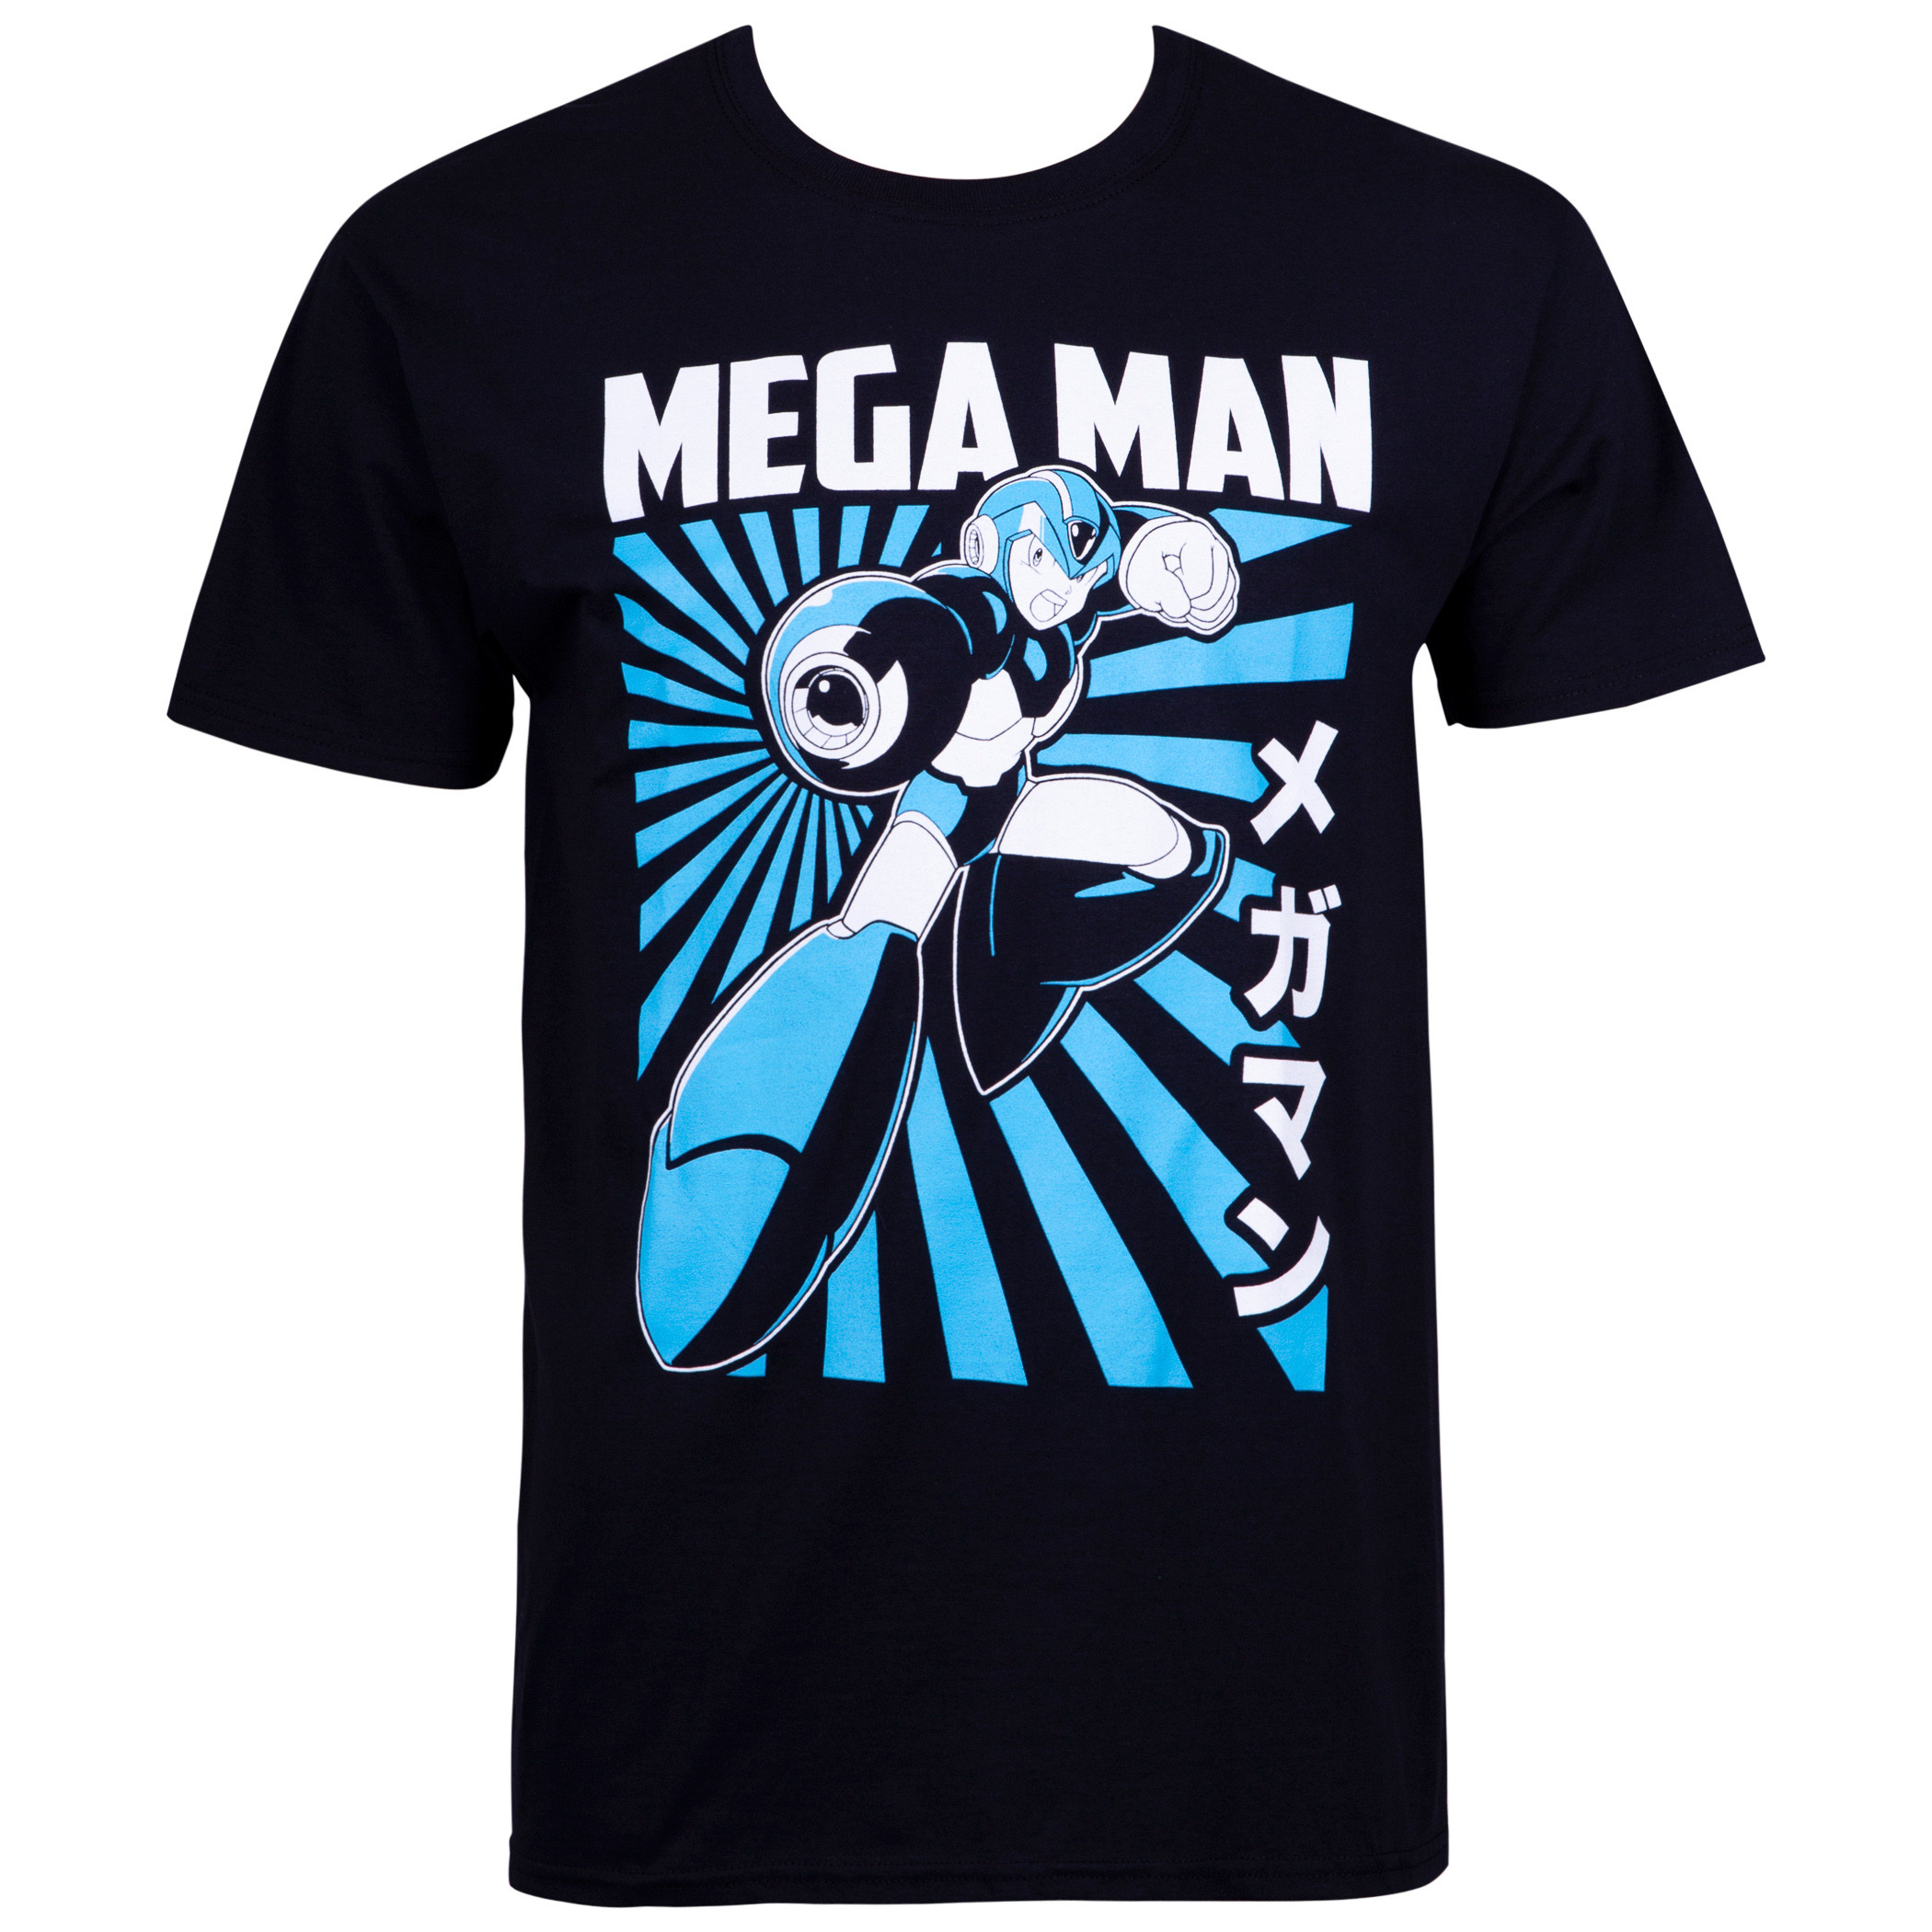 Mega Man Kanji Portrait Black Tee Shirt